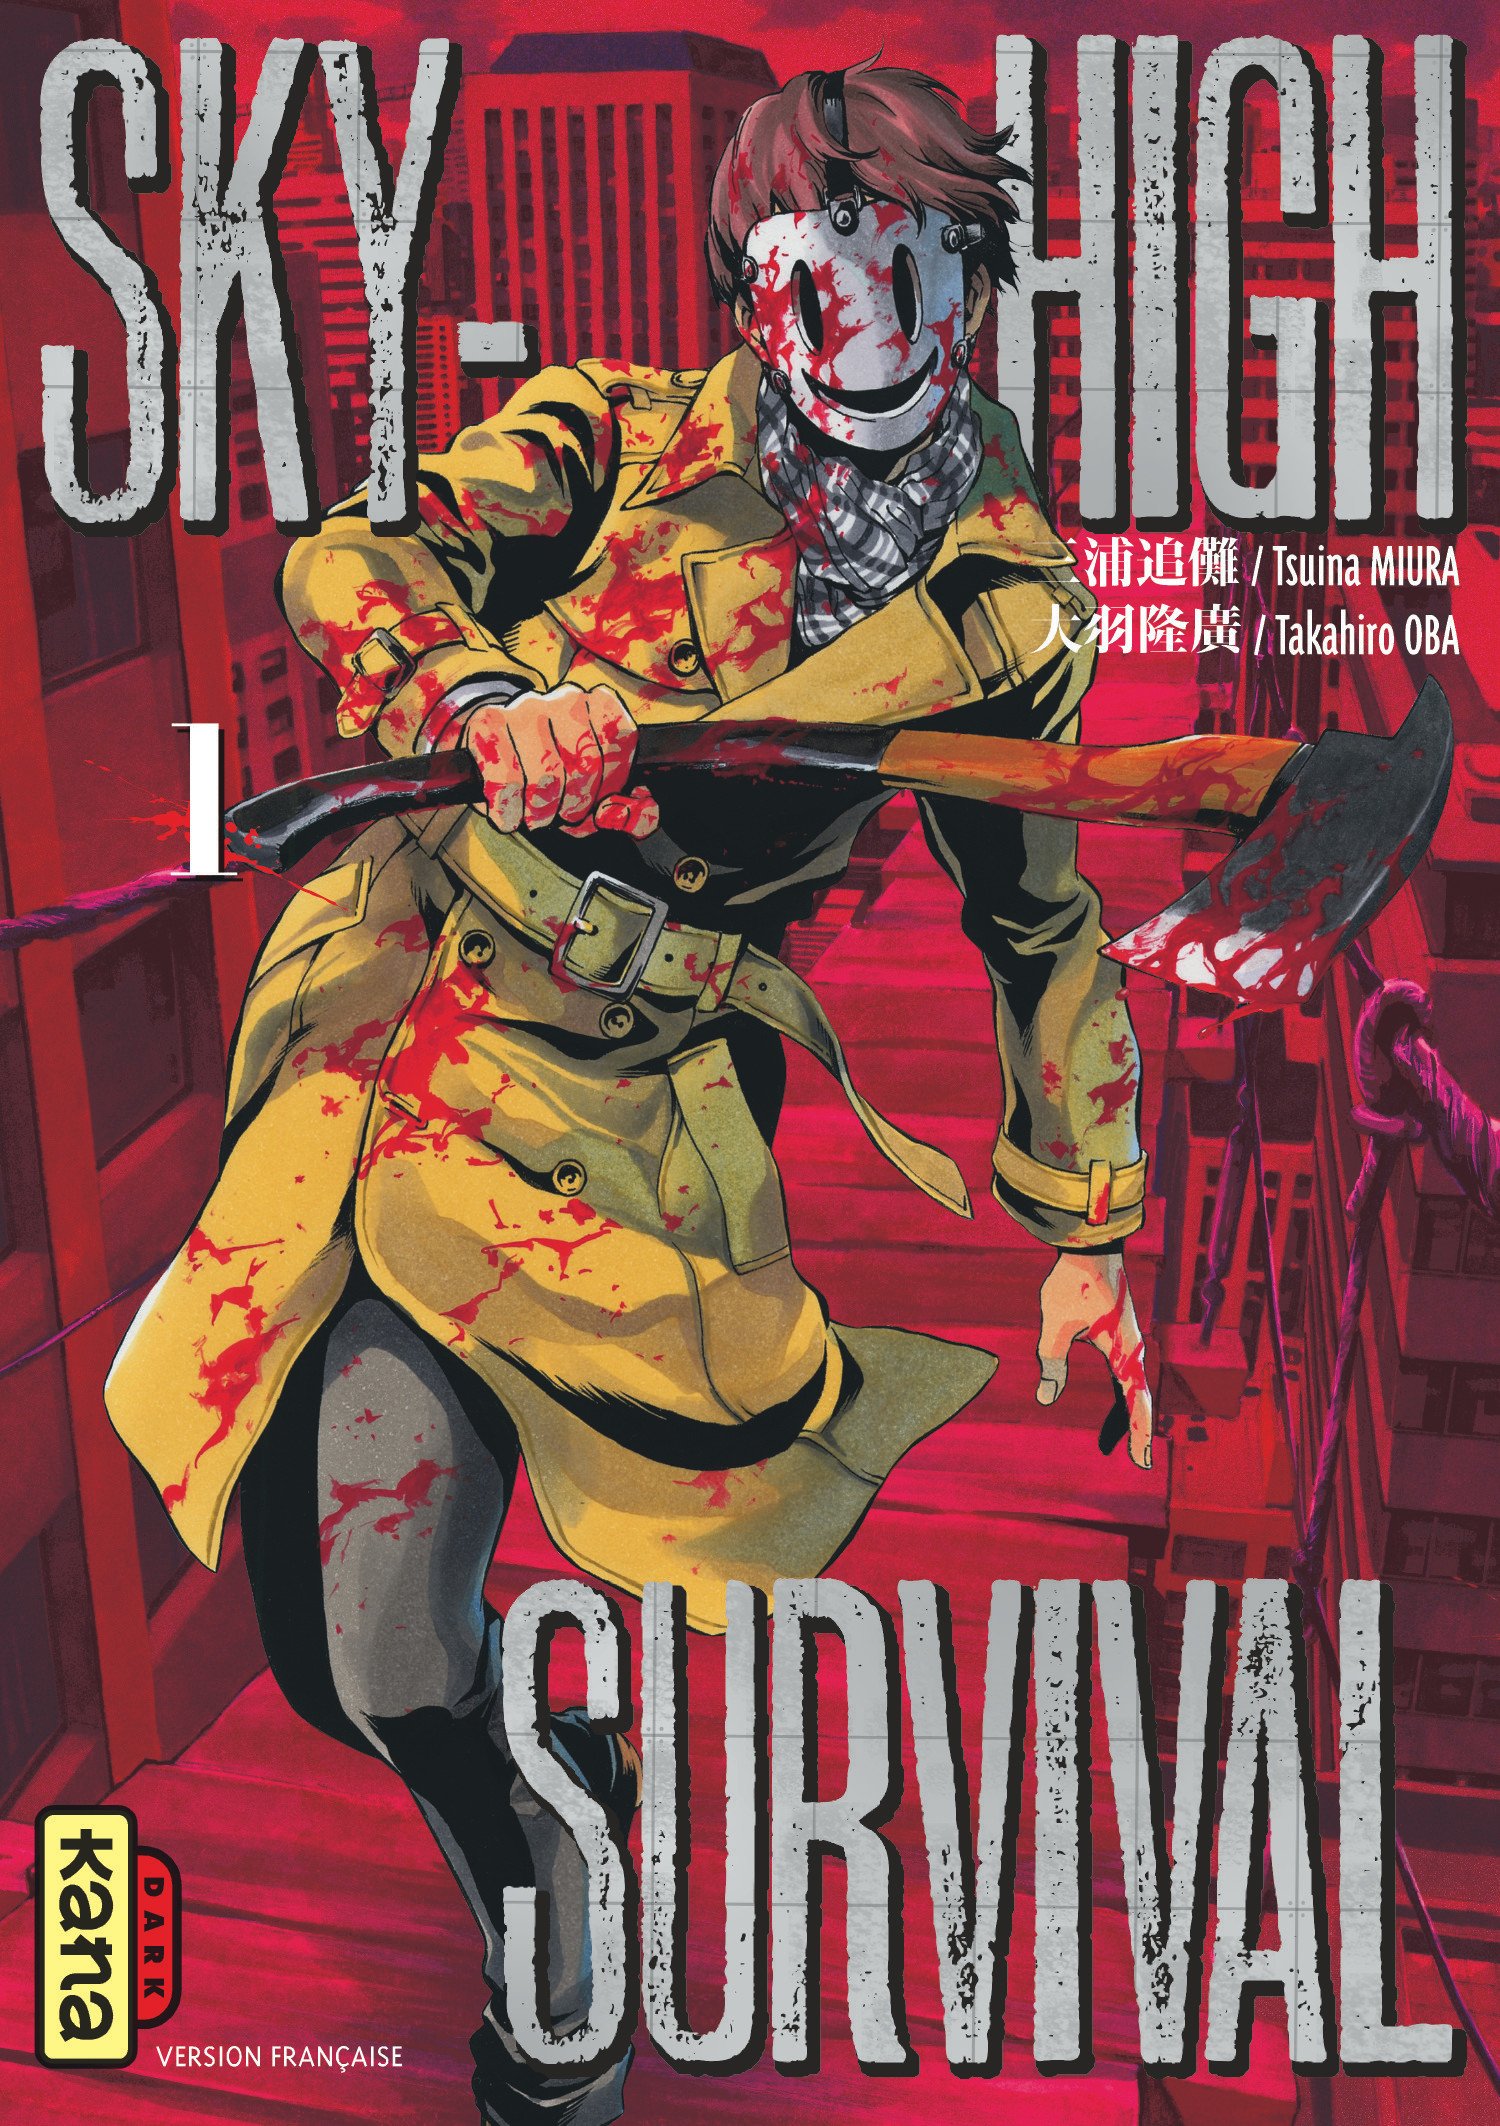 Sky-High Survival Vol.1